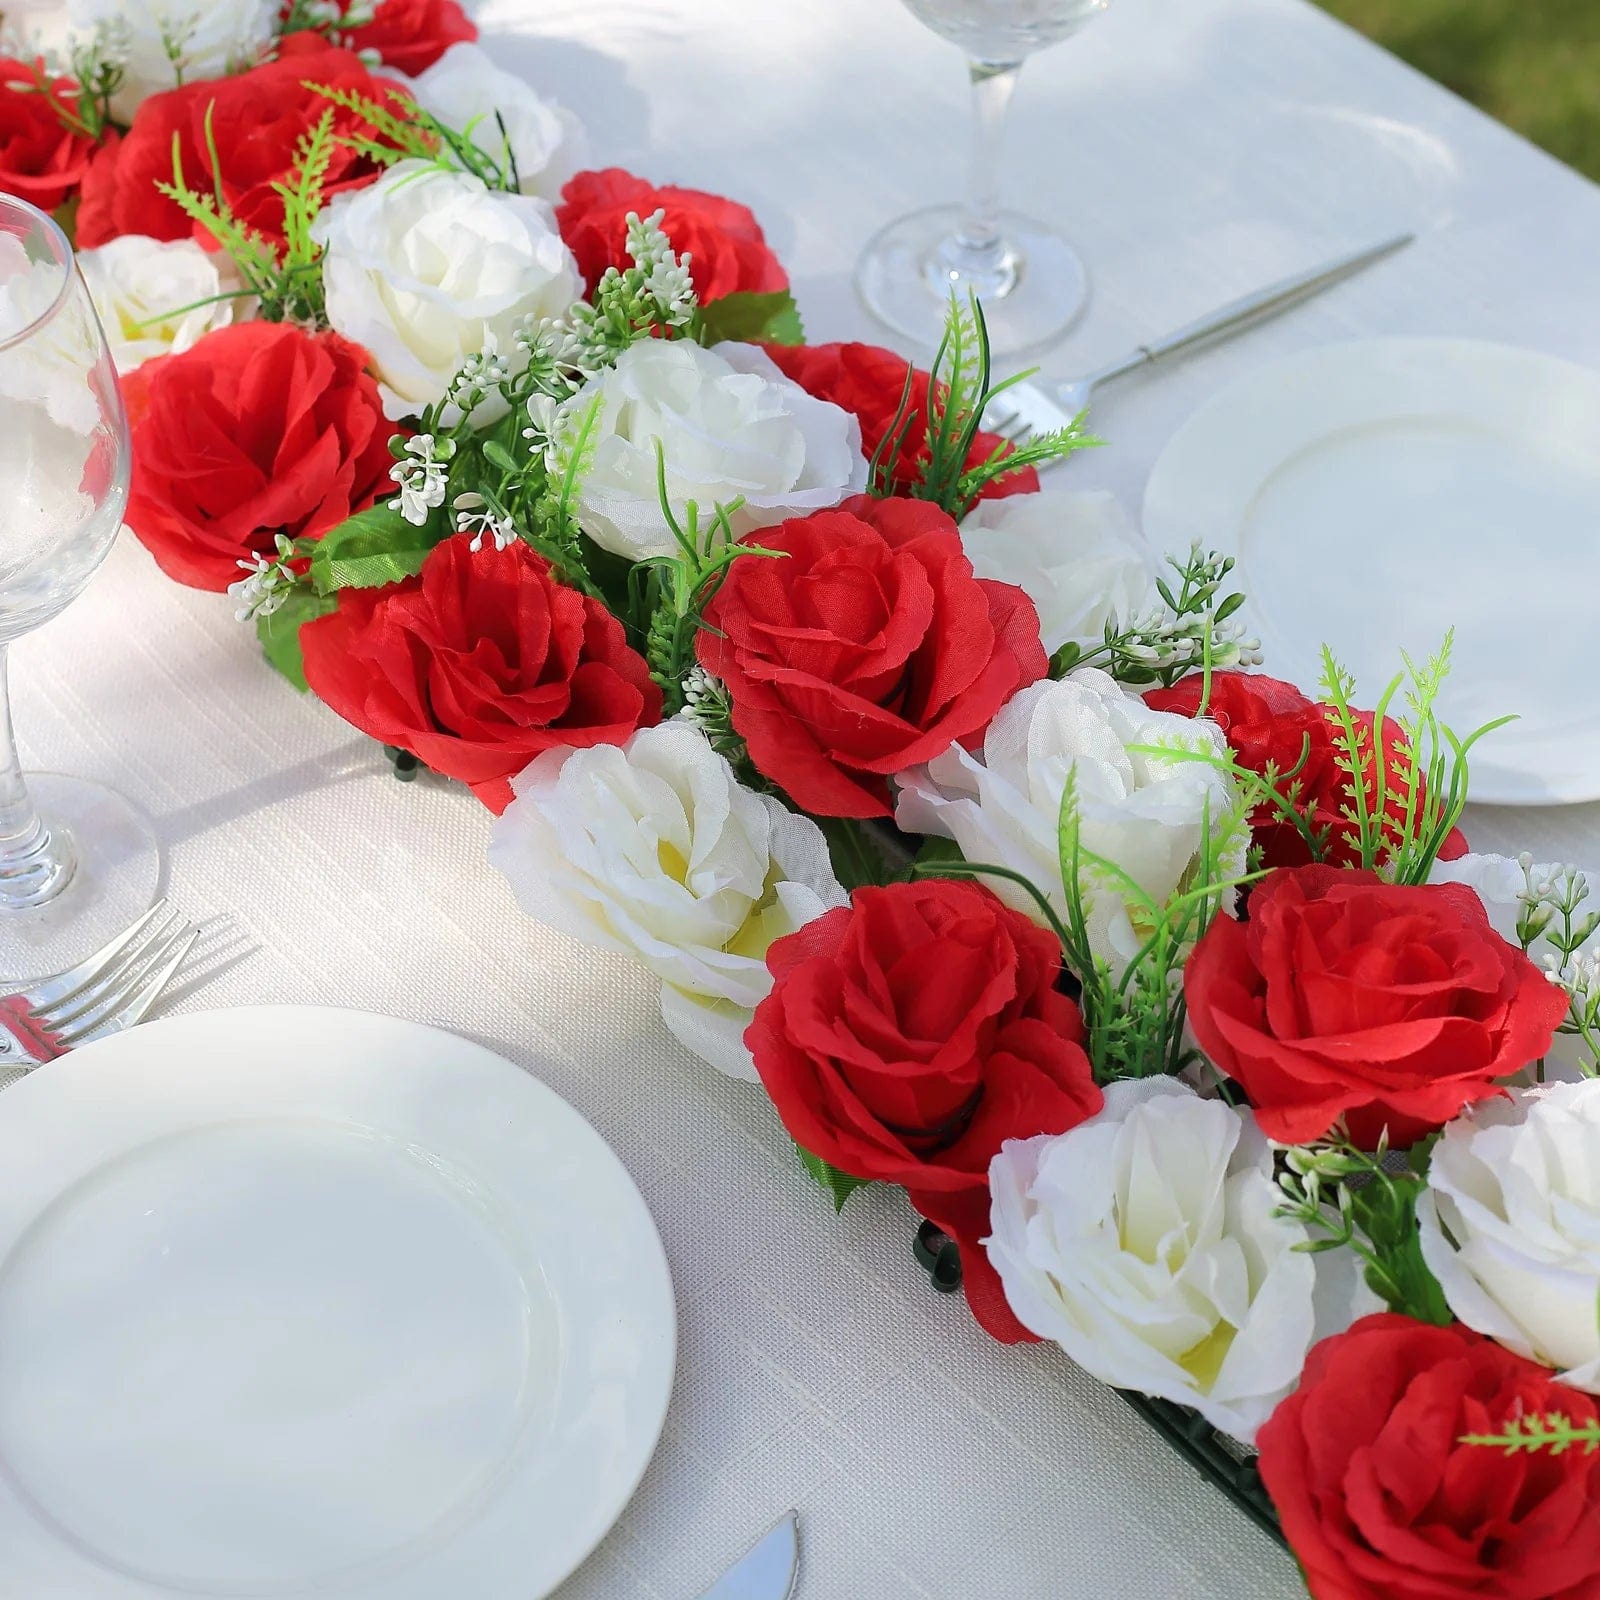 6 Artificial Rose Flower Panels Silk Floral Table Centerpiece